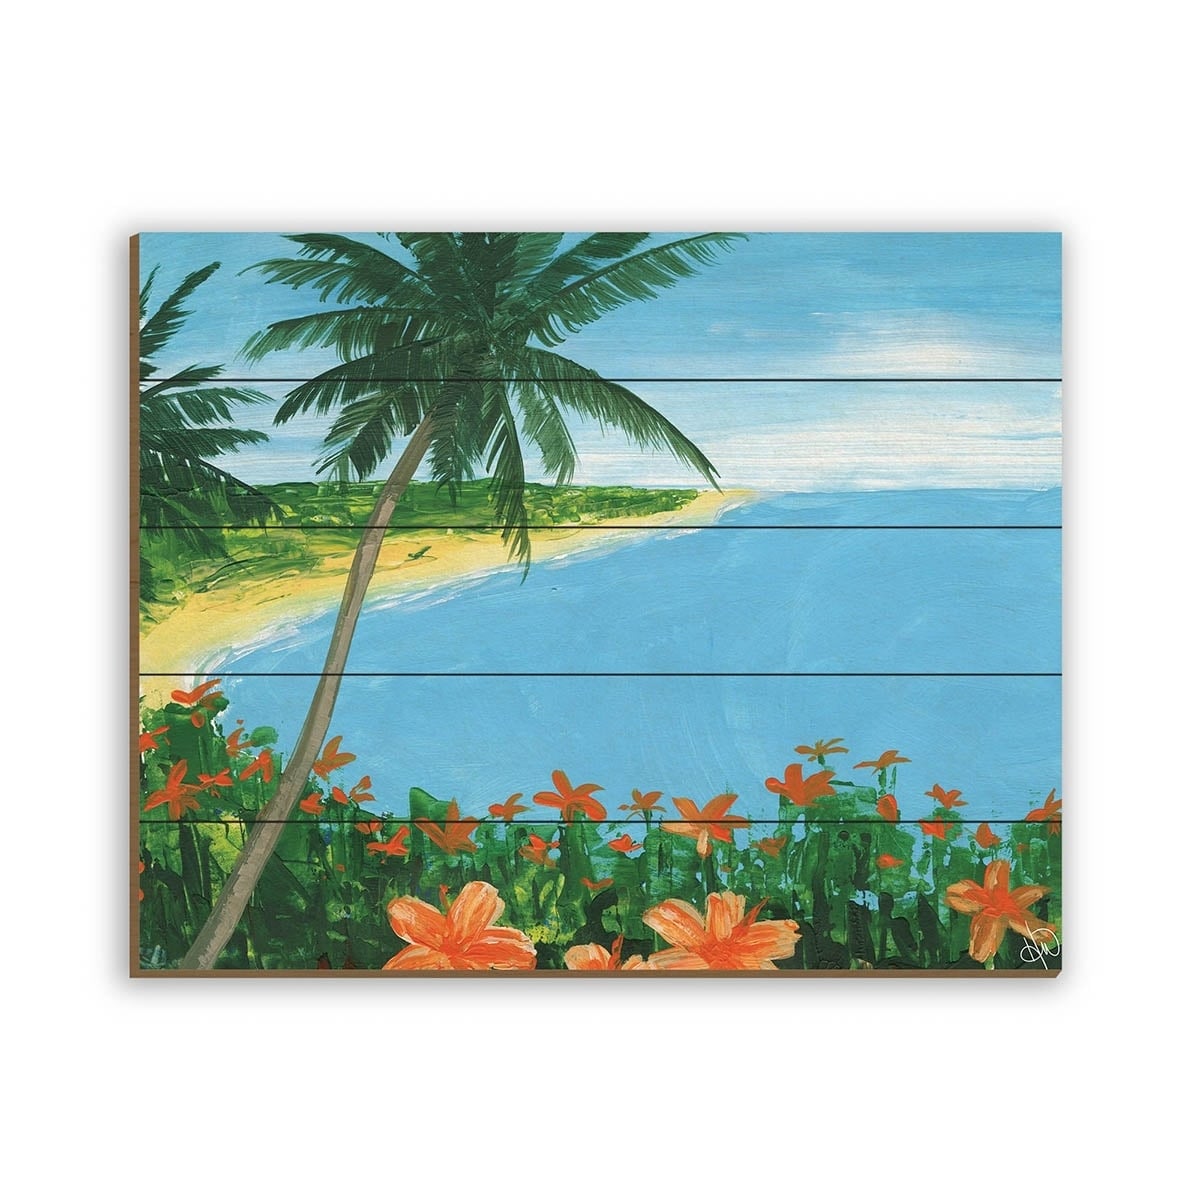 Kathy Ireland Oahu Island Tropical Paradise On Planked Wood Wall Art Print Overstock